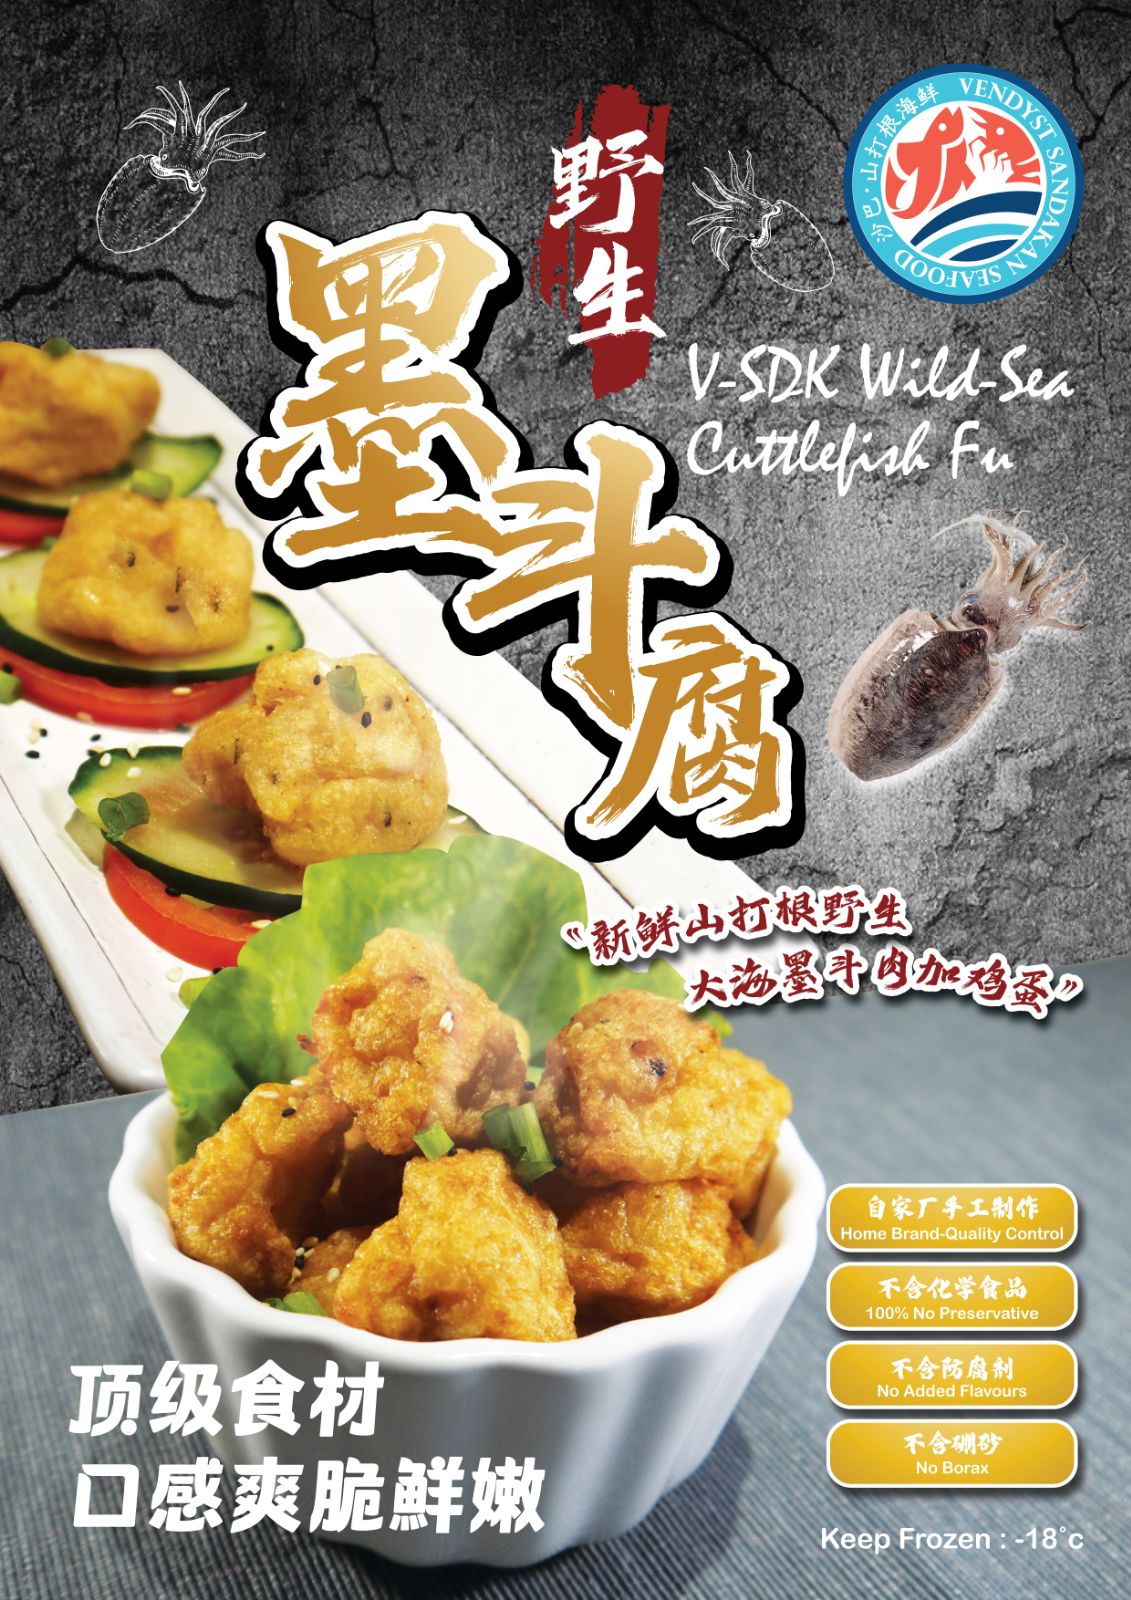 Vendyst ����Ұ����ī������V-SDK Wild-Sea Cuttlefish Fu��